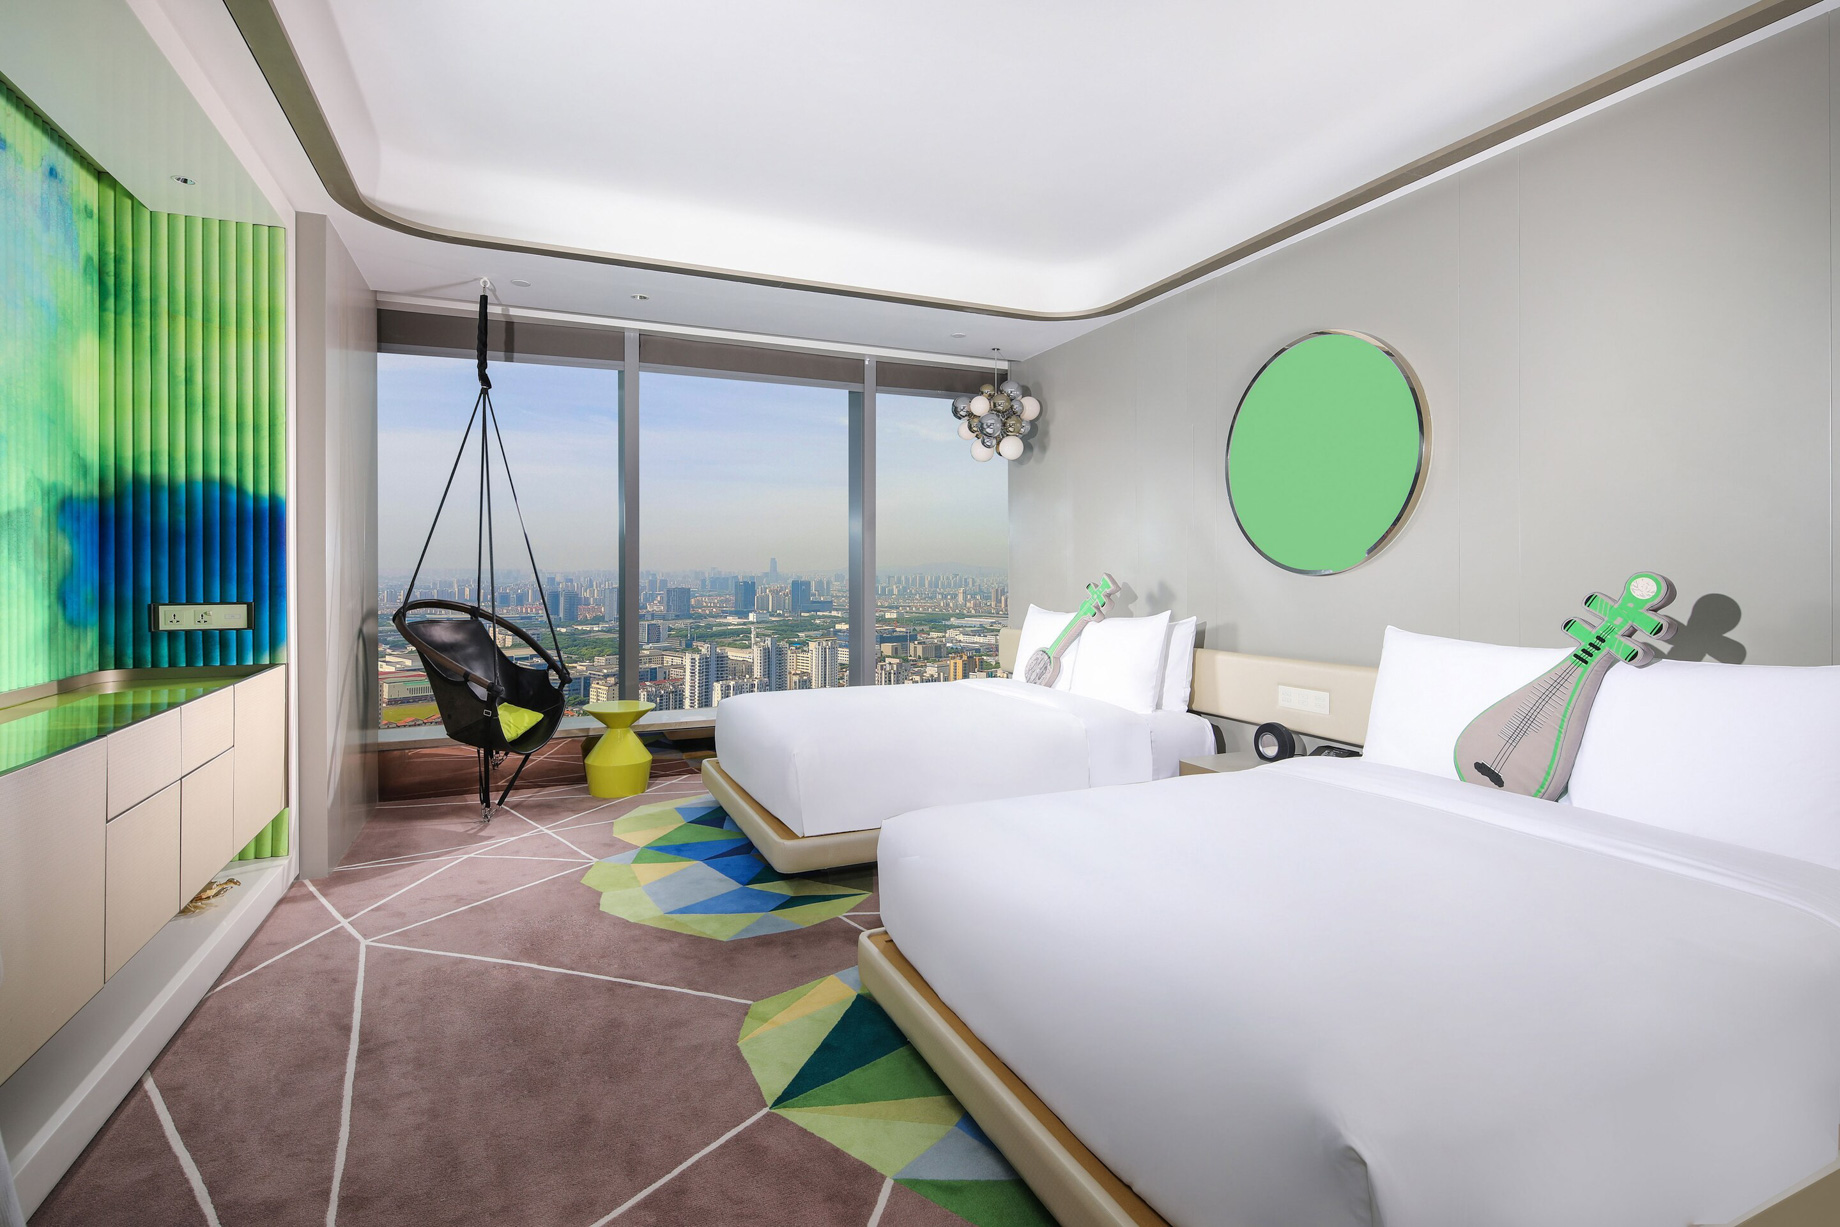 W Suzhou Hotel – Suzhou, China – Spectacular Room